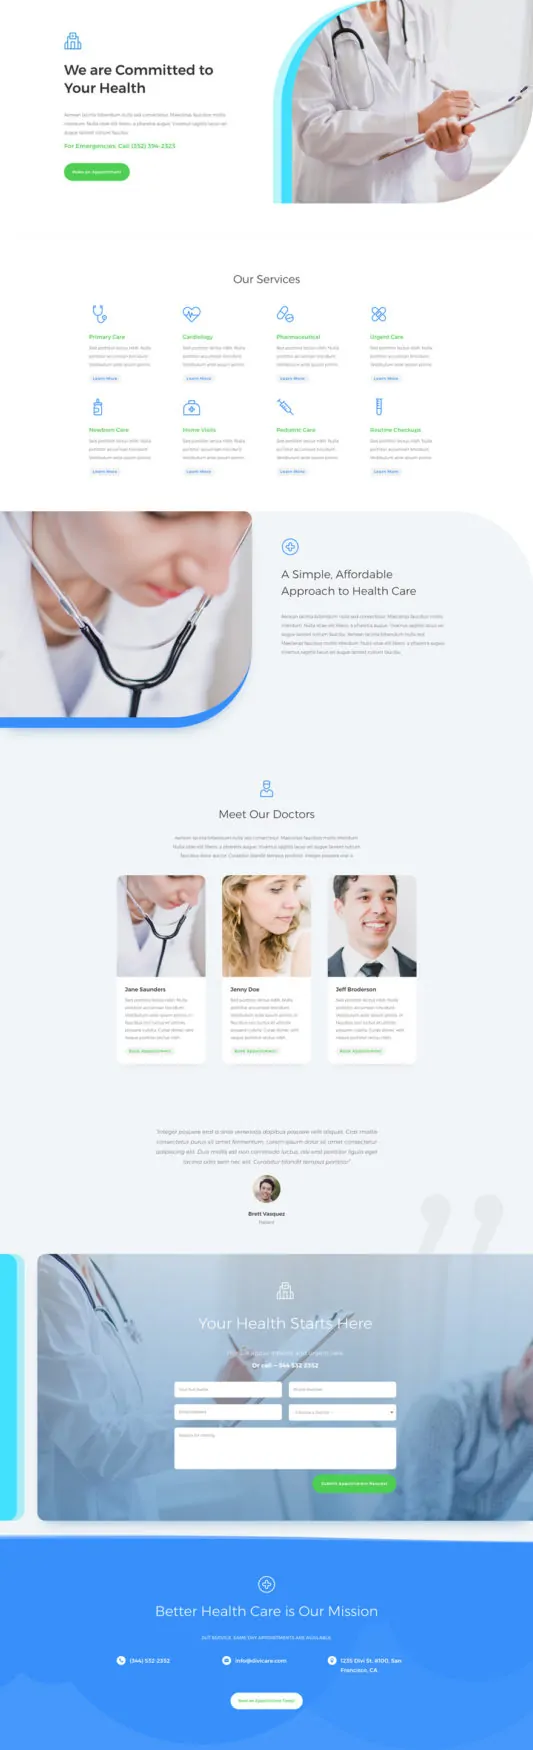 Doctor's Office Web Design 5